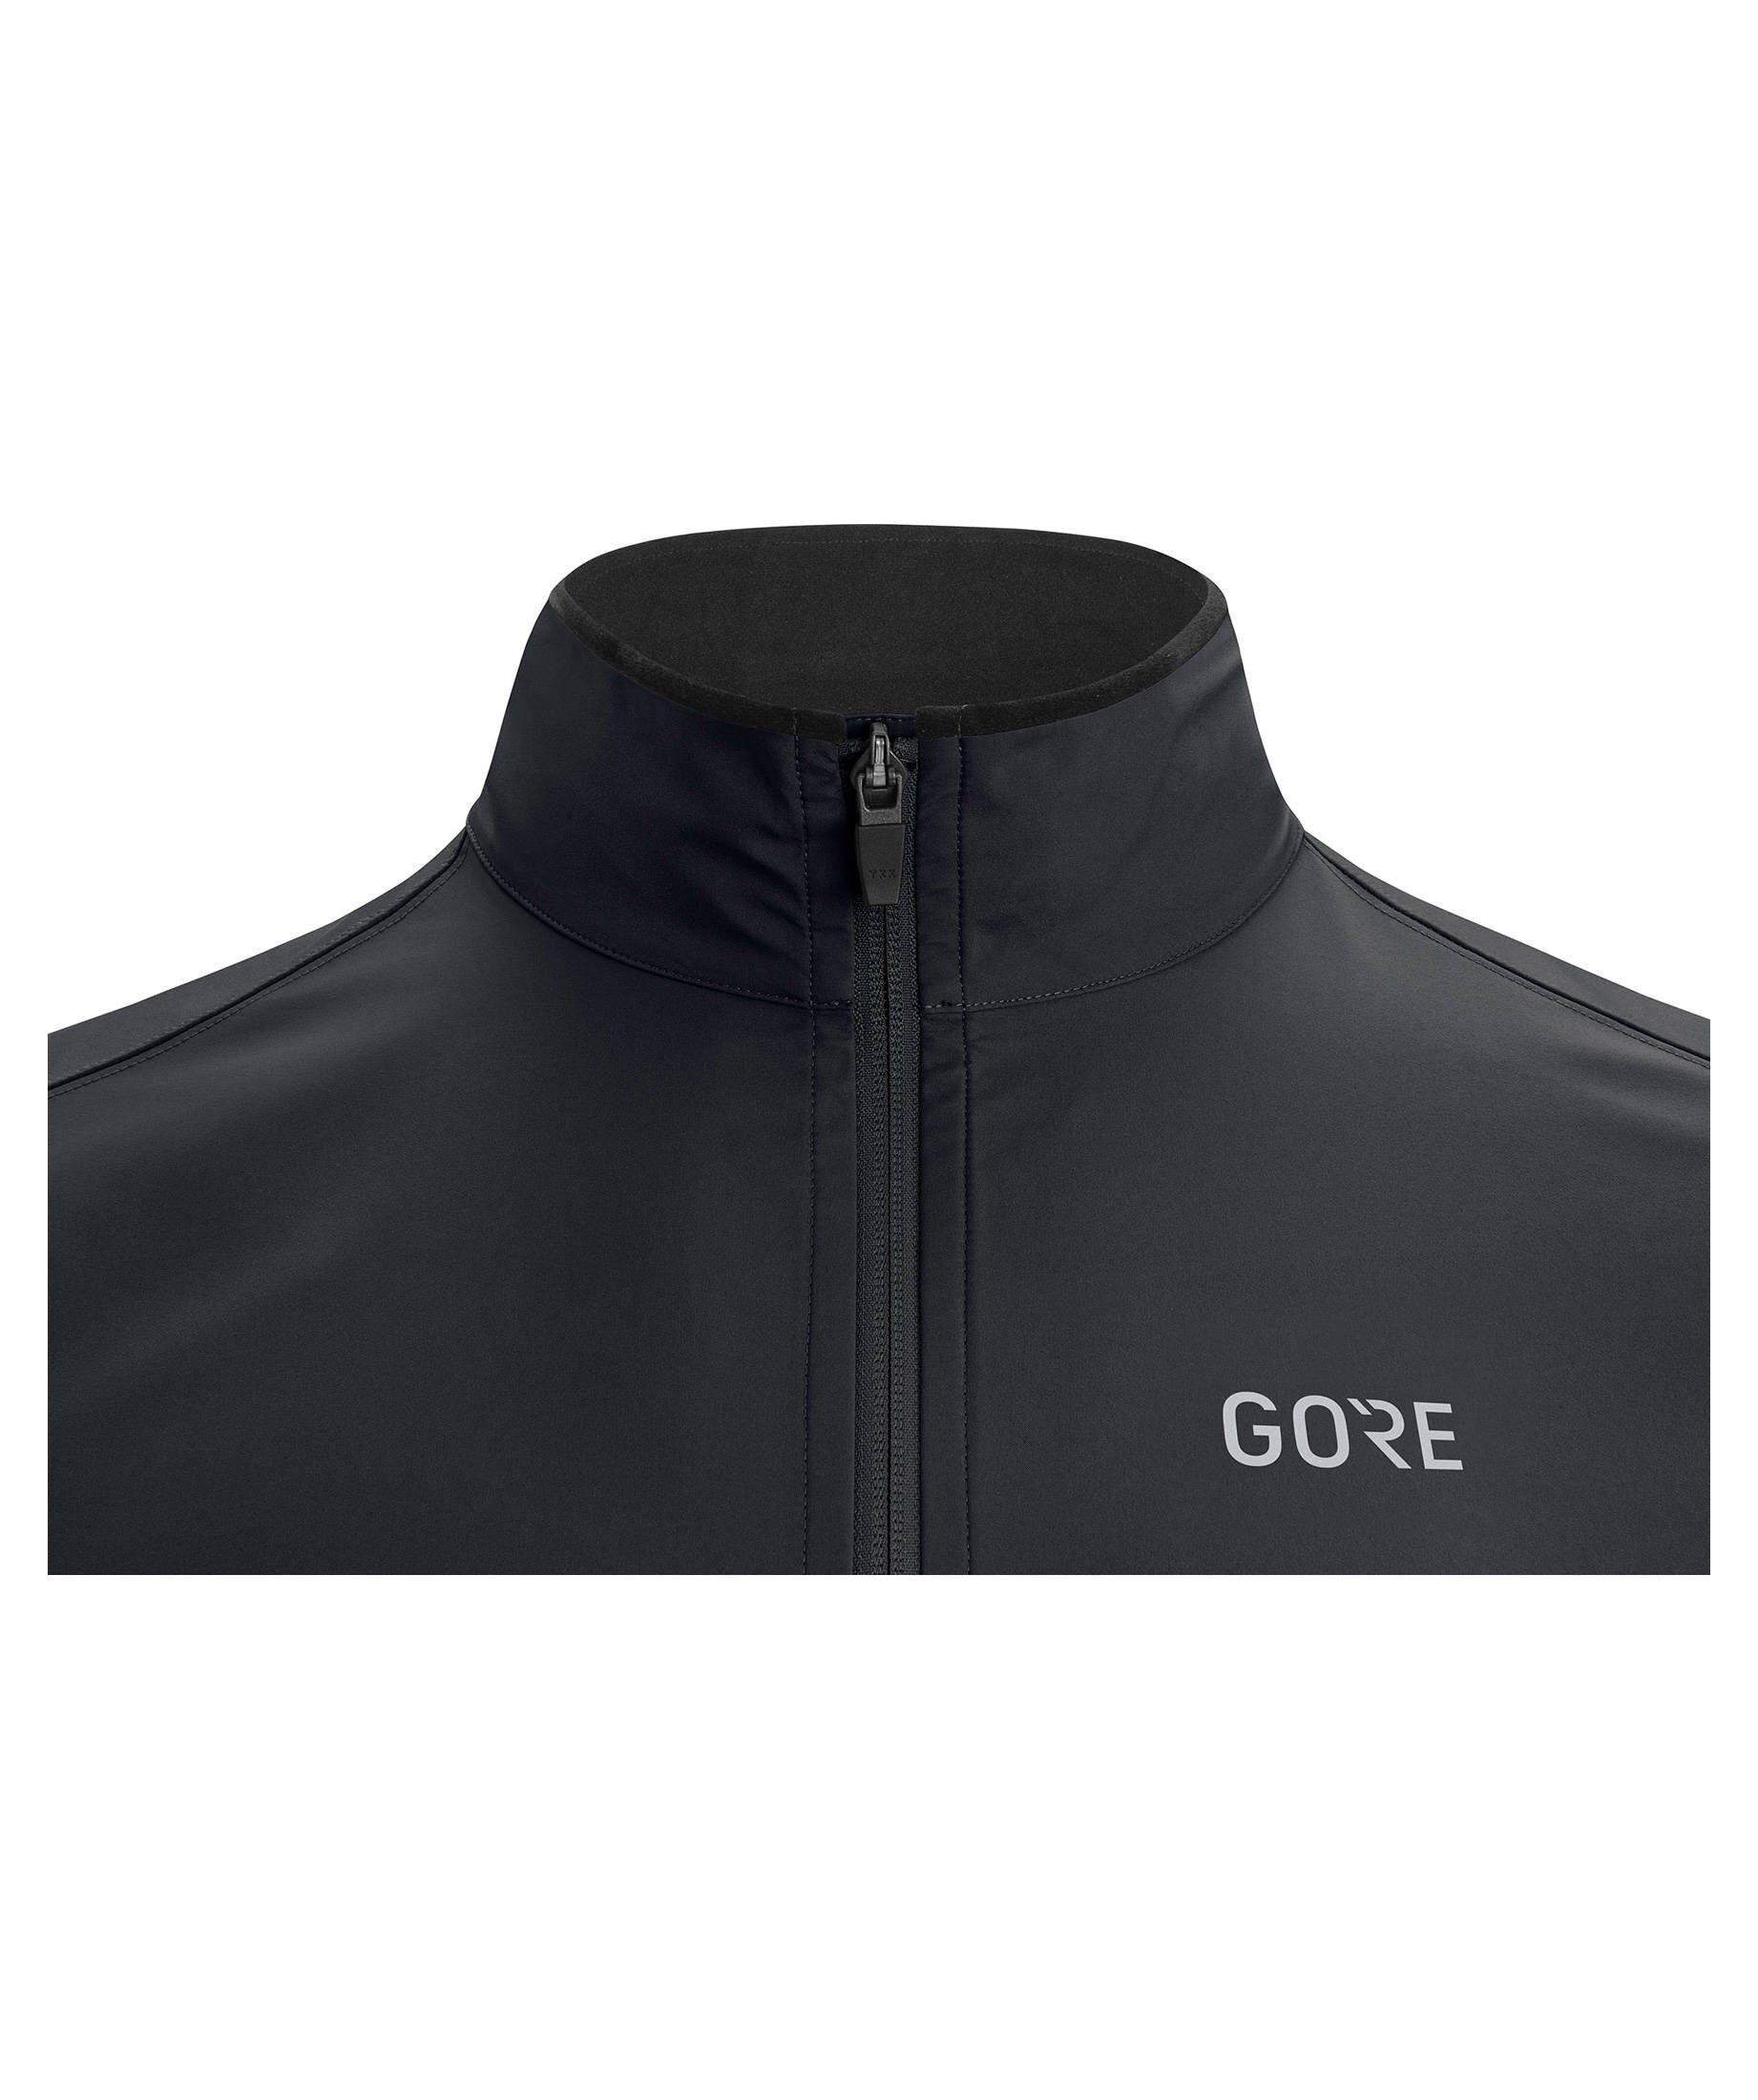 Damen Gore-Tex black/neon Laufjacke GORE® 9908 Laufsport Wear "R3 Infinium yellow Jacke